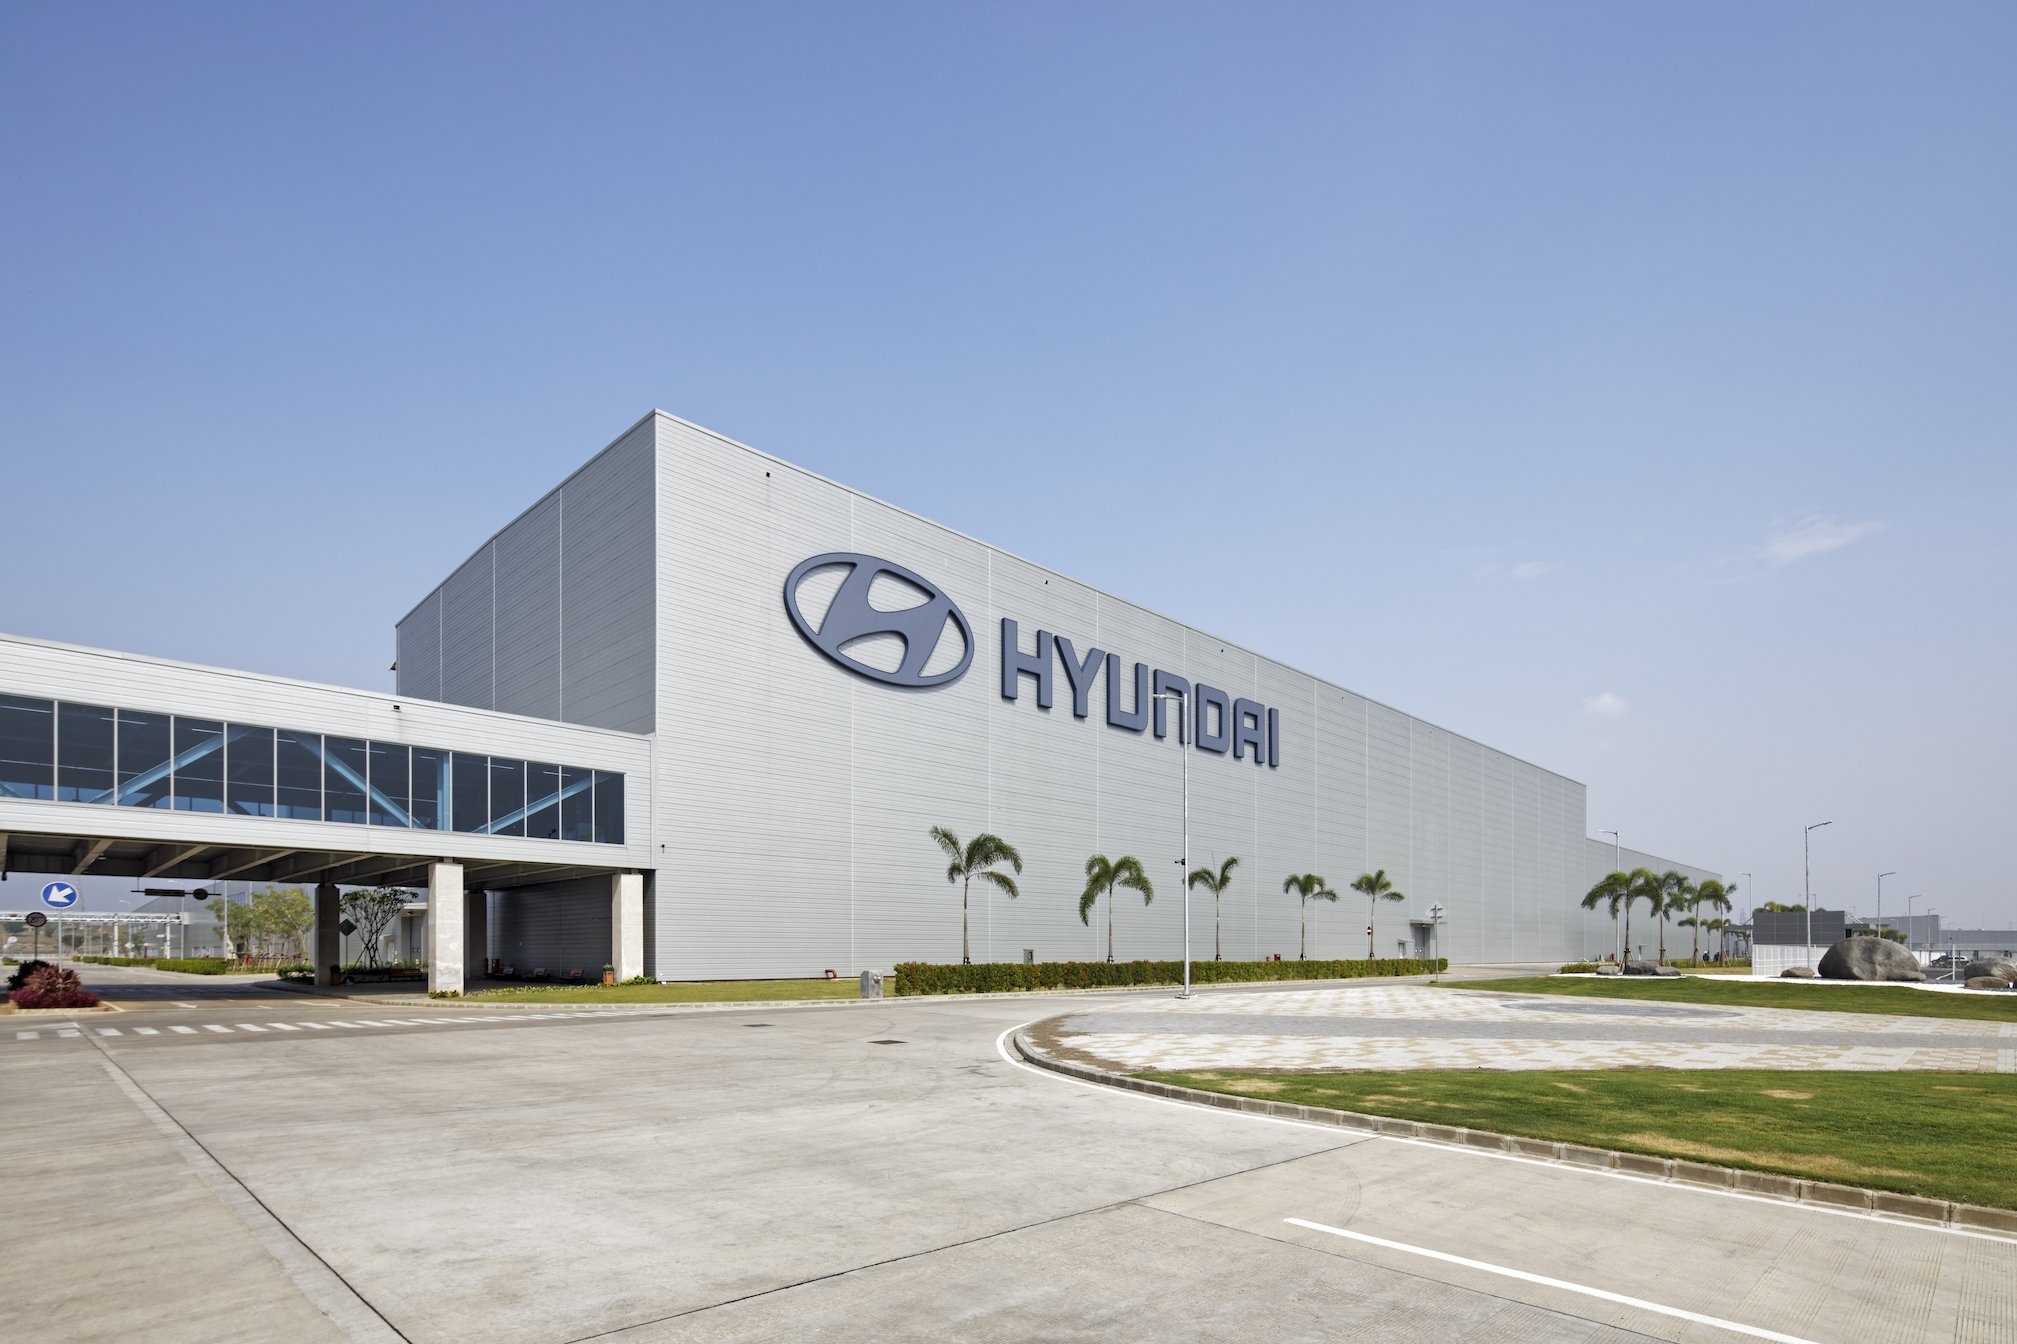 068-Hyundai Factory (TAKENAKA) -29.08__05.09.2021-.jpg